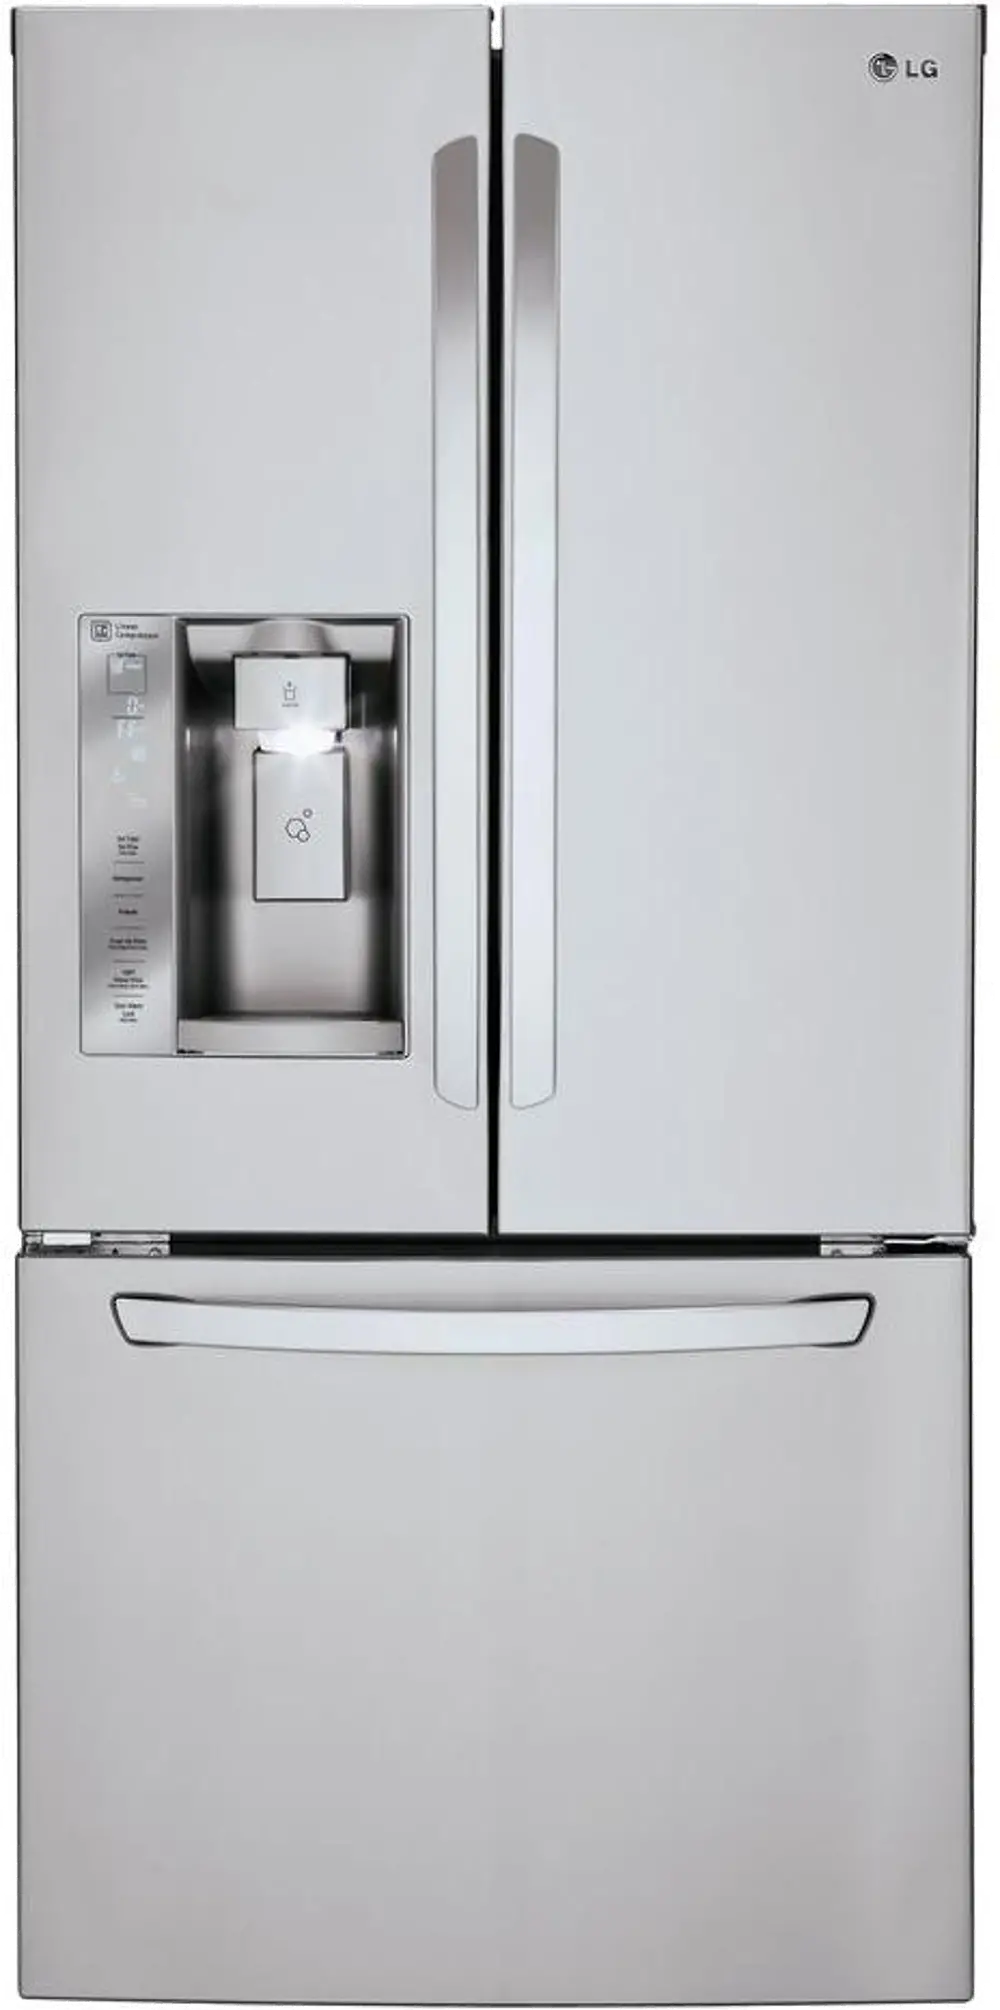 LFXS24623S LG 24.2 cu. ft. French Door Refrigerator - 33 Inch Stainless Steel-1